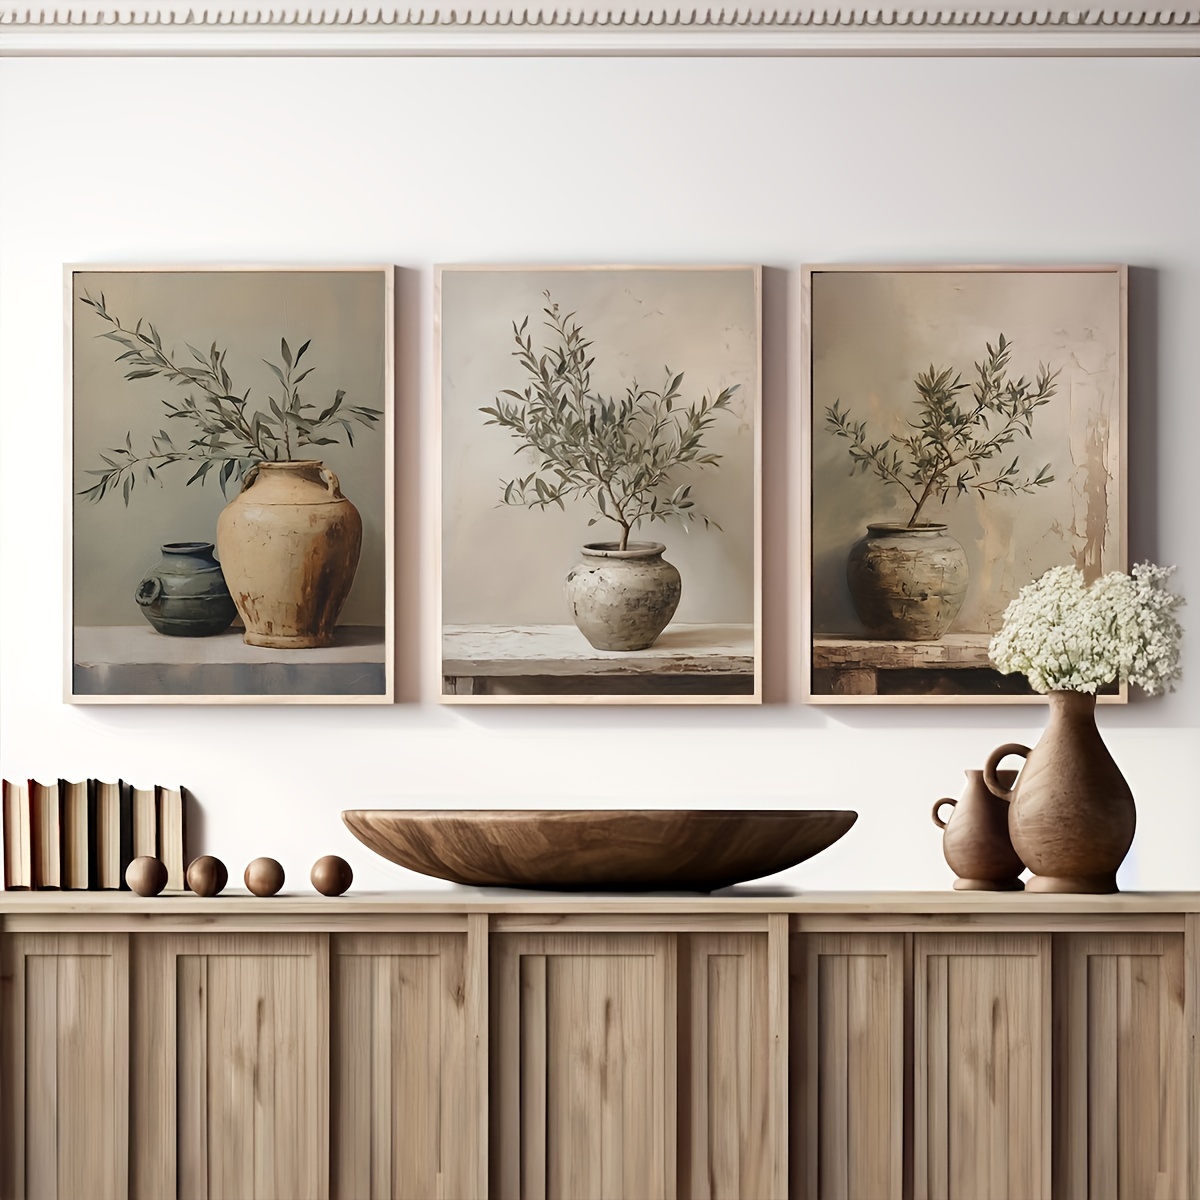 

Set Of 3 Vintage Olive Branch Vase Canvas Art Prints, Retro Botanical Wall Art, Unframed Modern Home Decor For Living Room, Bedroom, Hallway - Minimalist Aesthetic Plant Posters